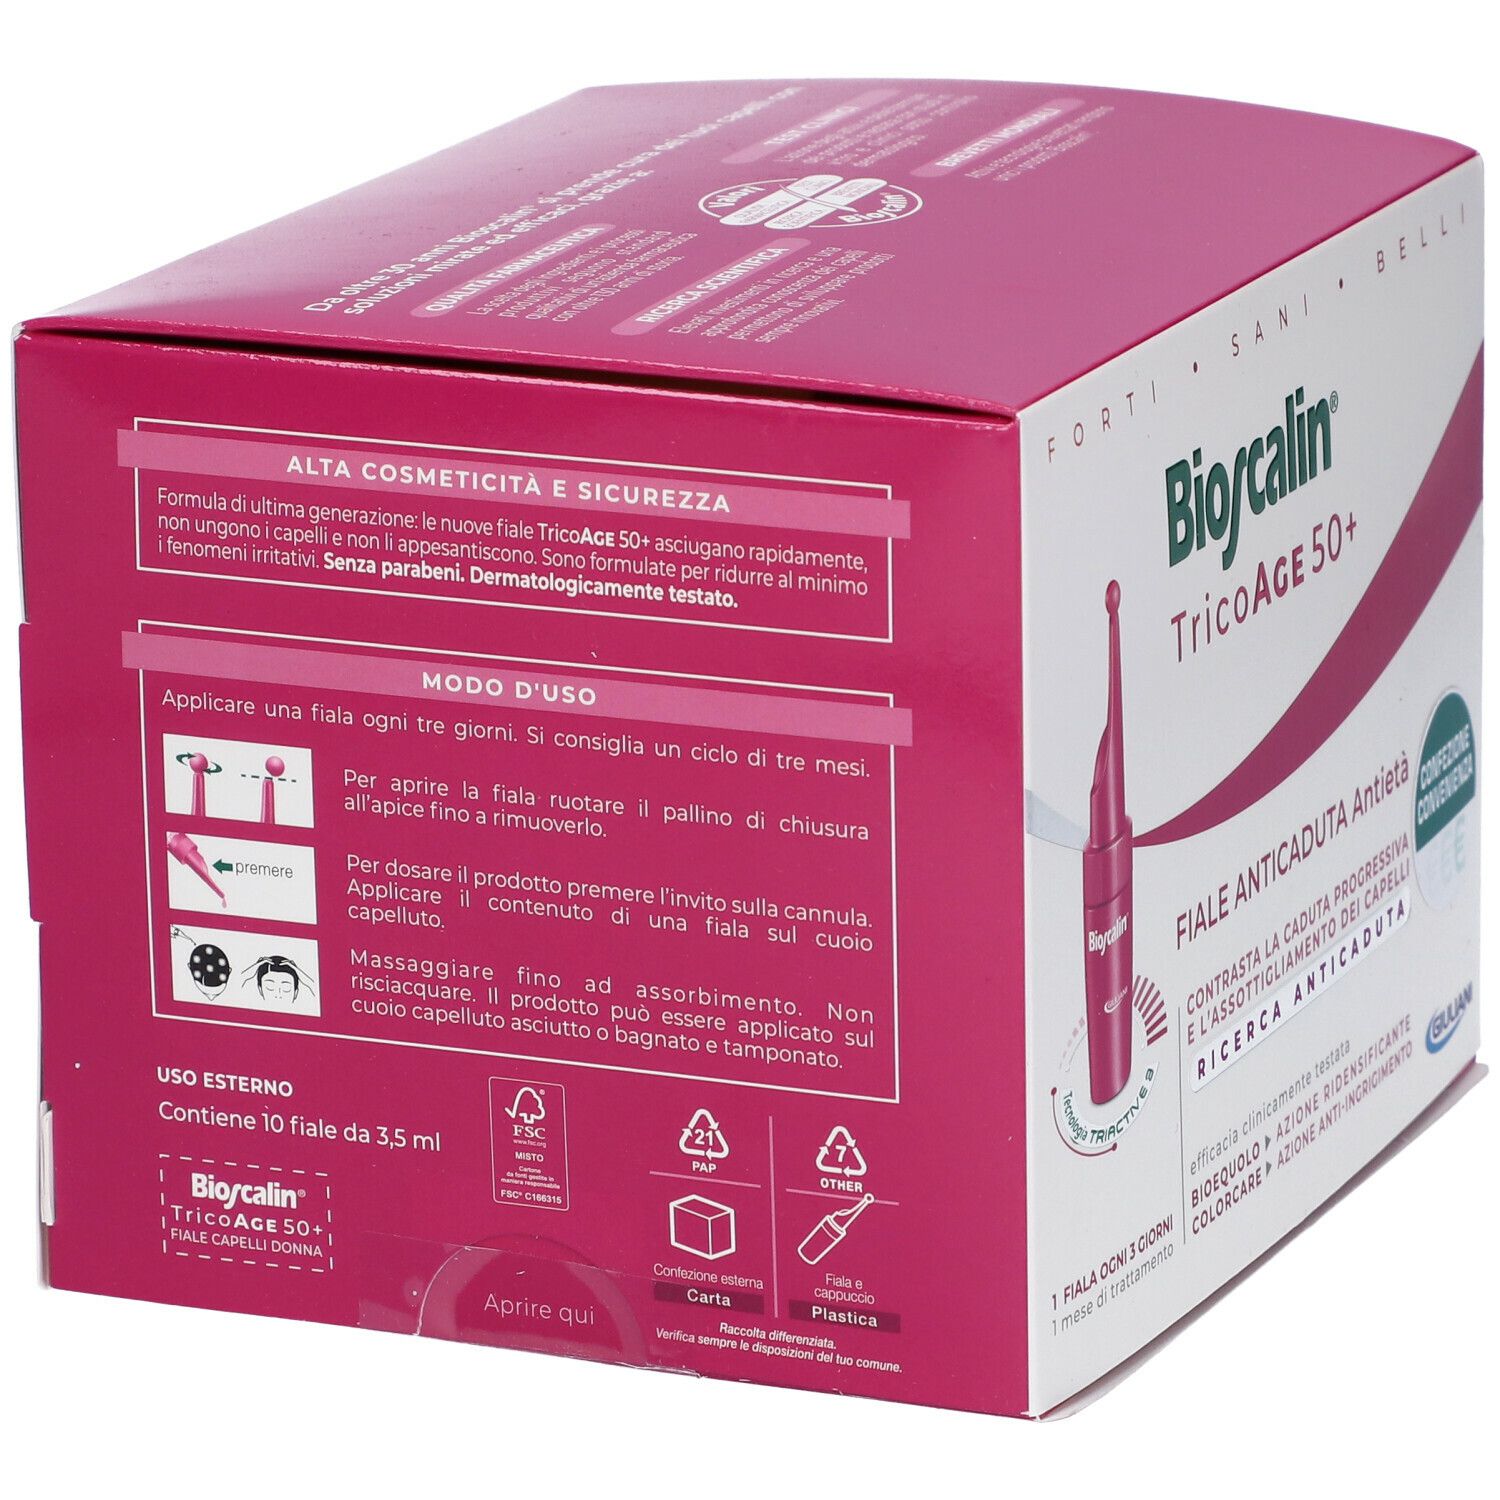 Bioscalin® TricoAGE 50+ Anti-Haarausfall Ampullen